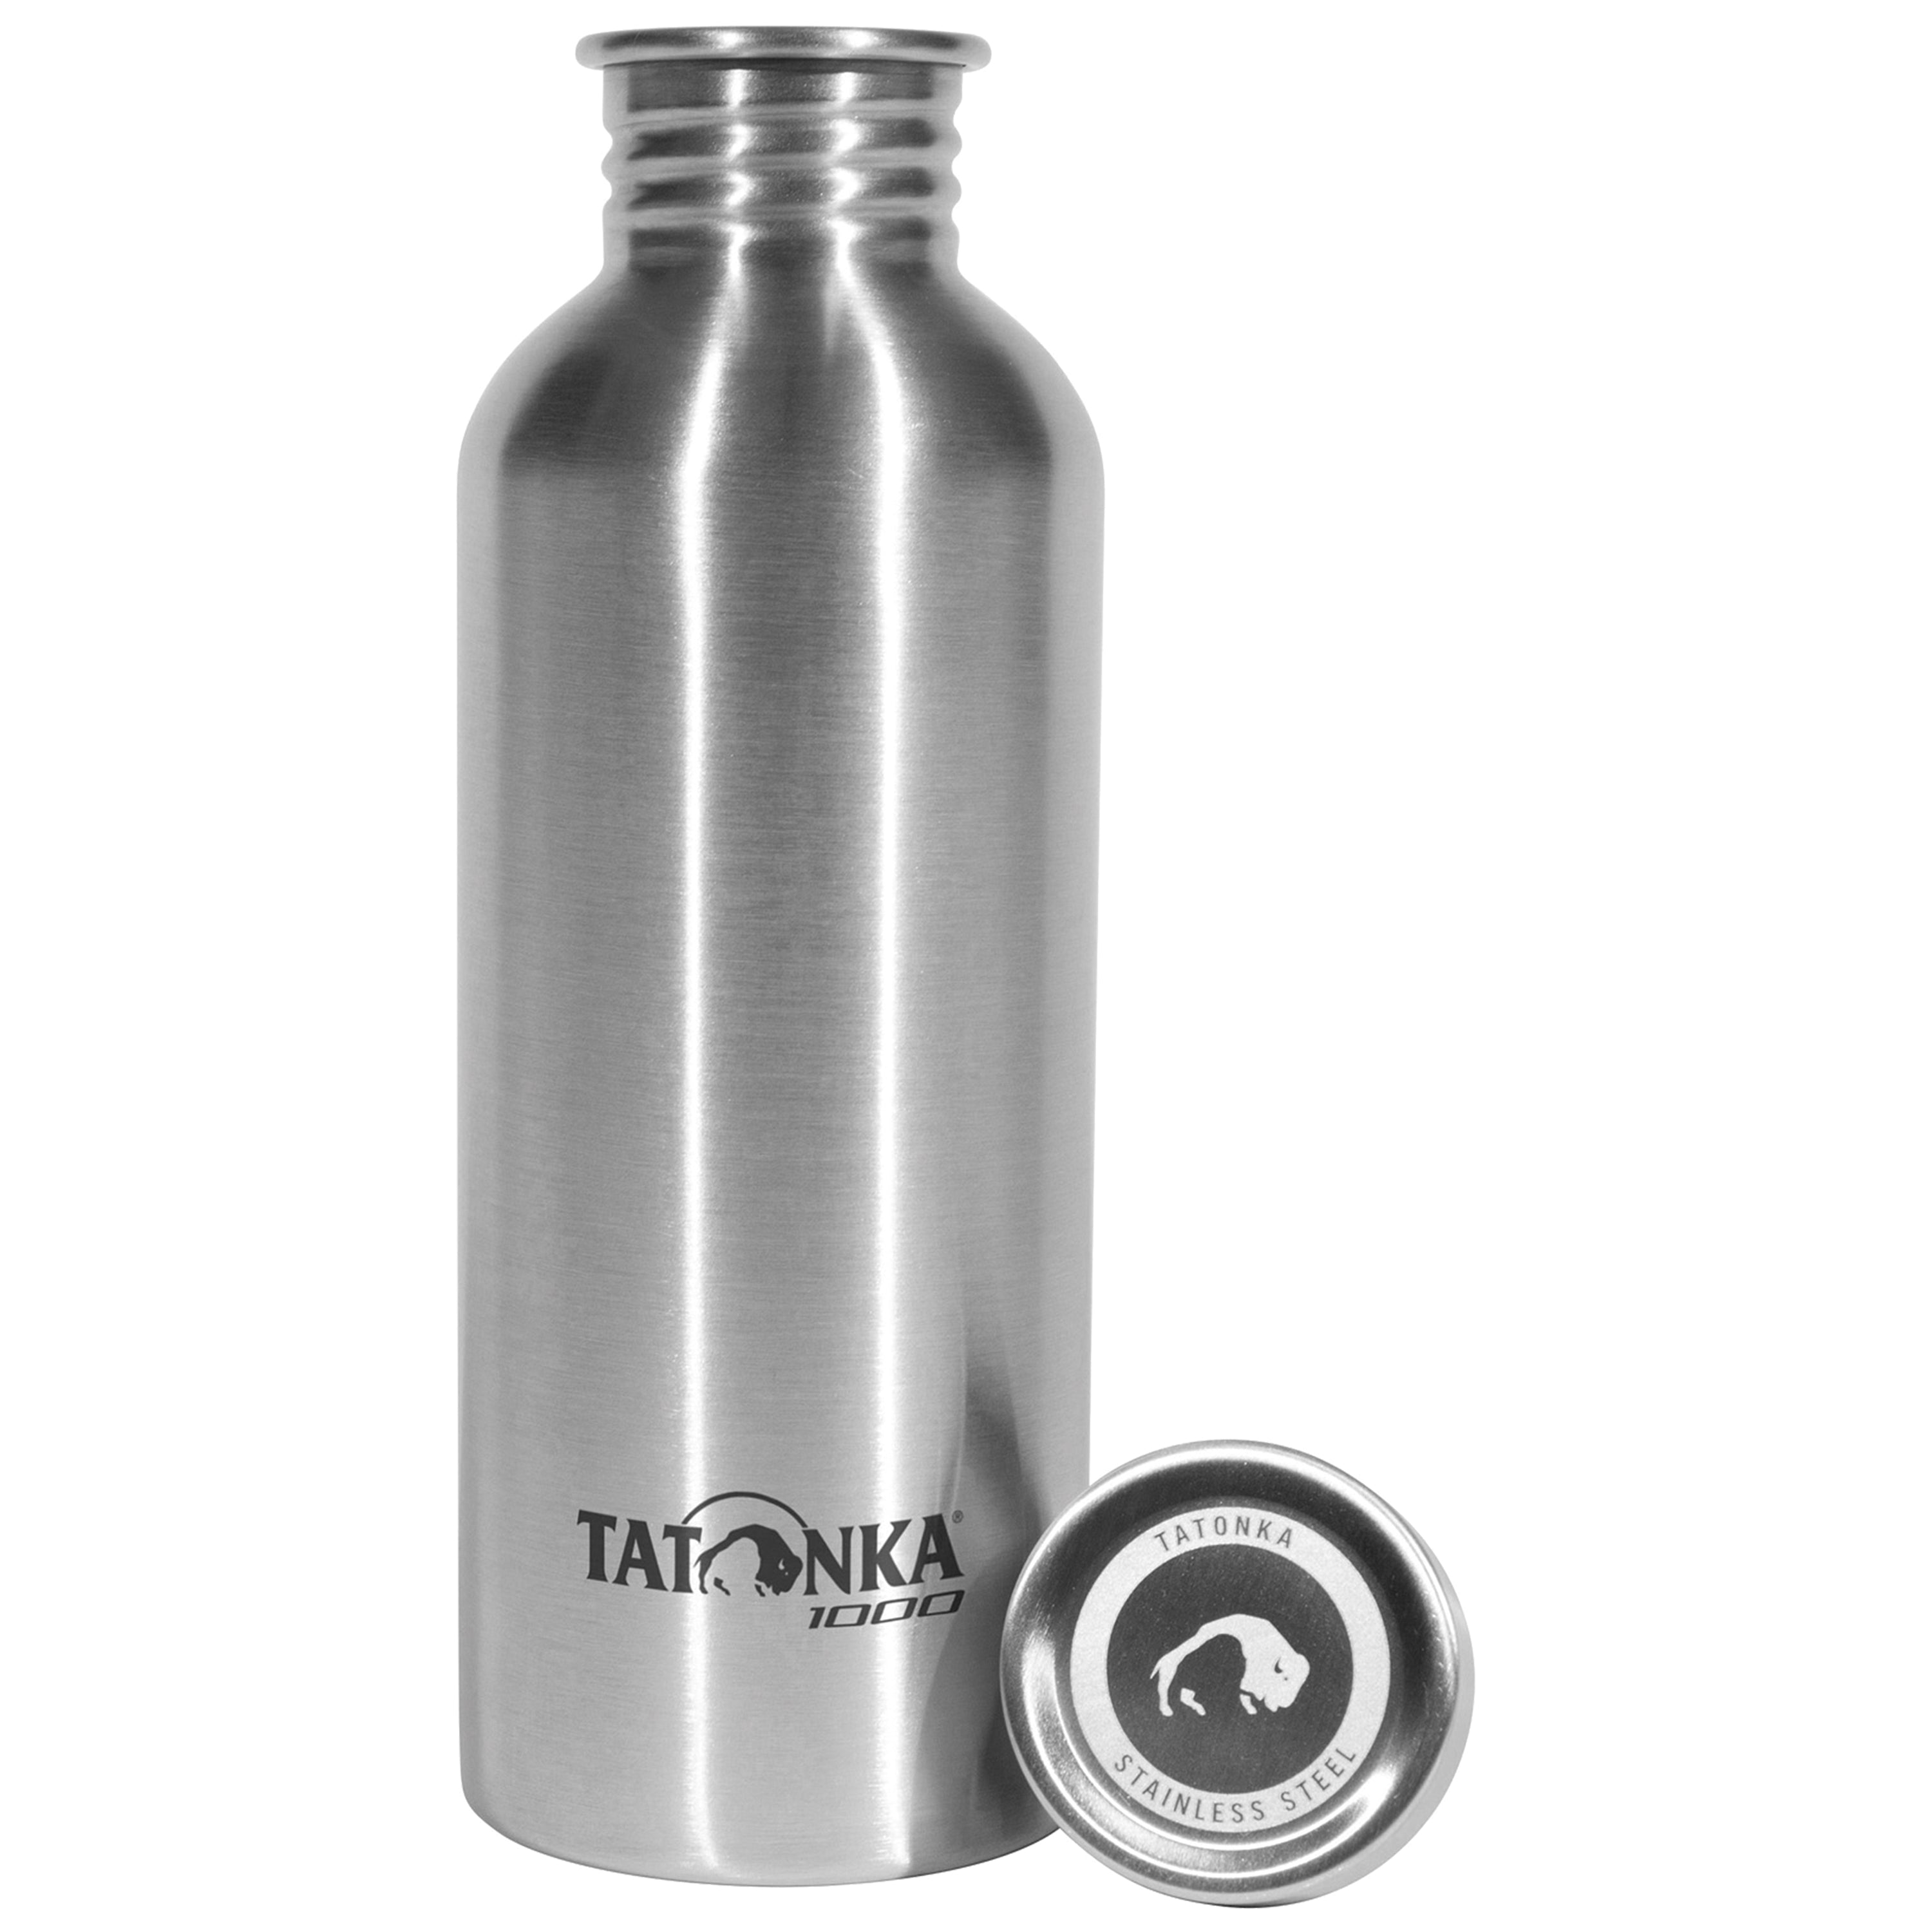 Tatonka Trinkflasche Edelstahl Stainless Bottle Premium 1 L